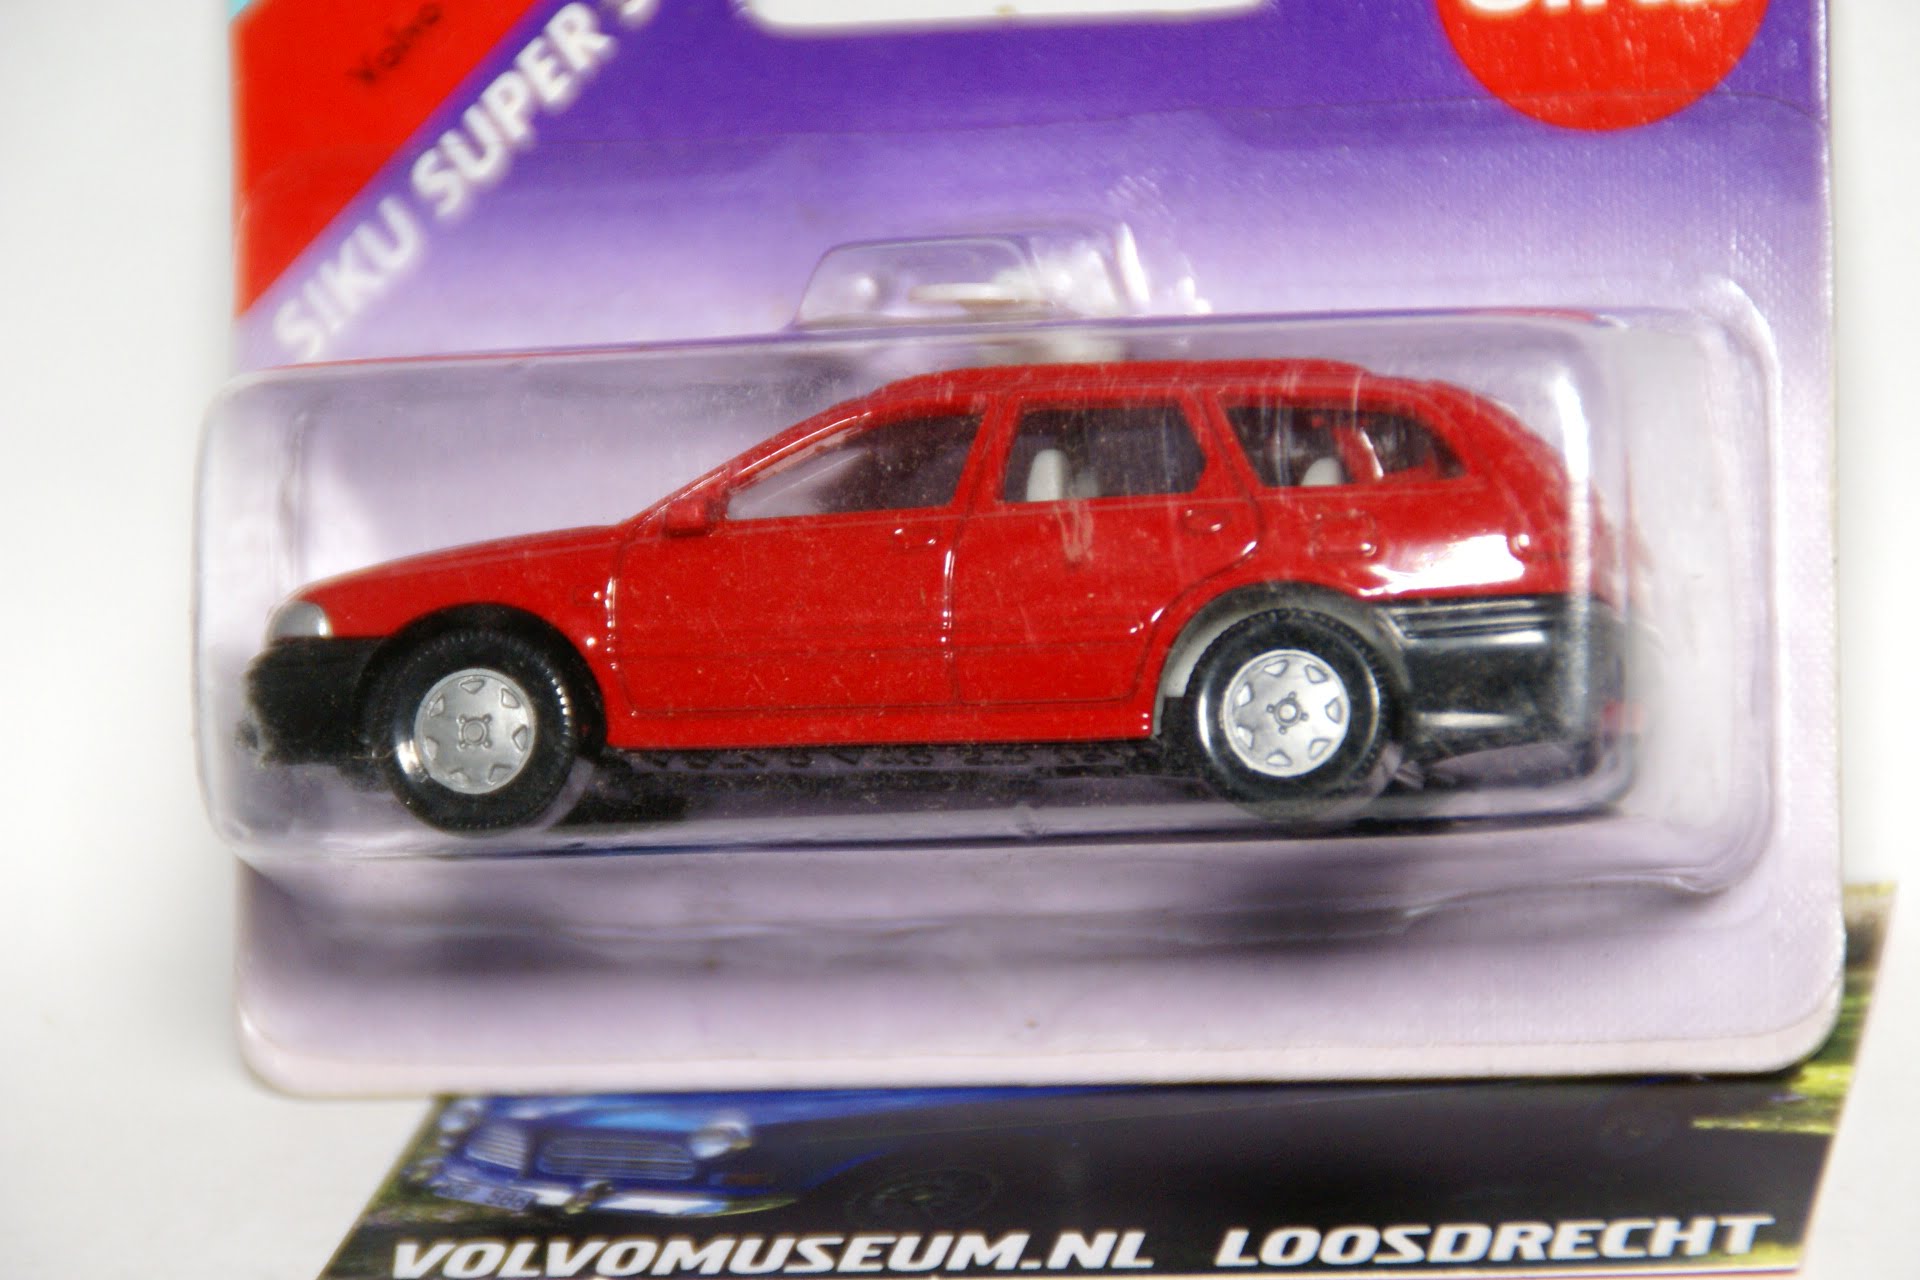 Raar Monetair Spin DSC02646 miniatuur Volvo V40 rood ca 1op70 Siku MB > Zwedenparts.com